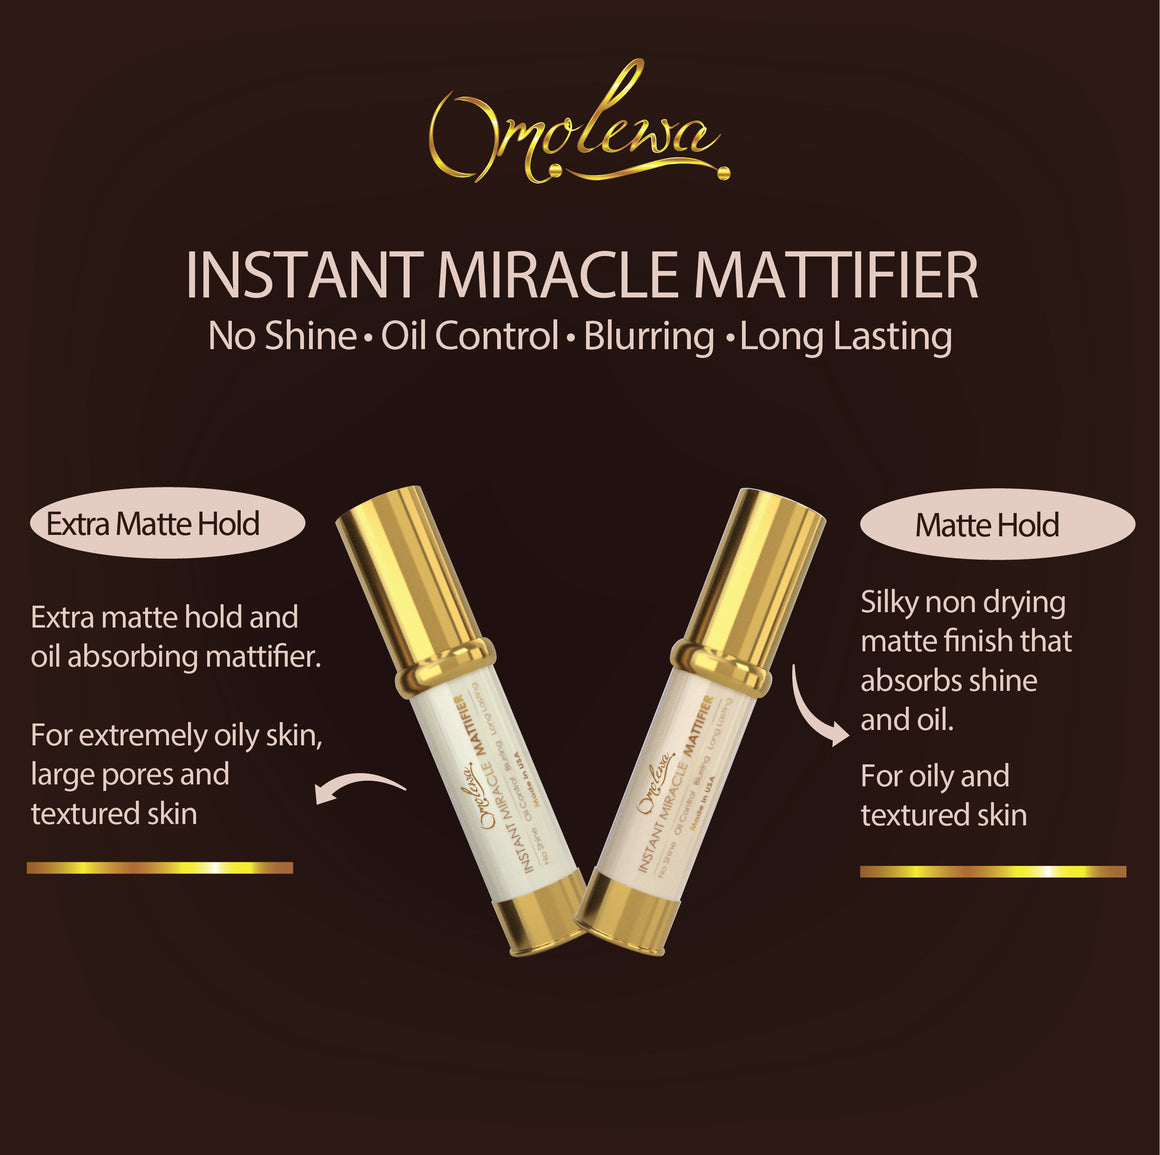 Instant Miracle Mattifier omolewa-makeup